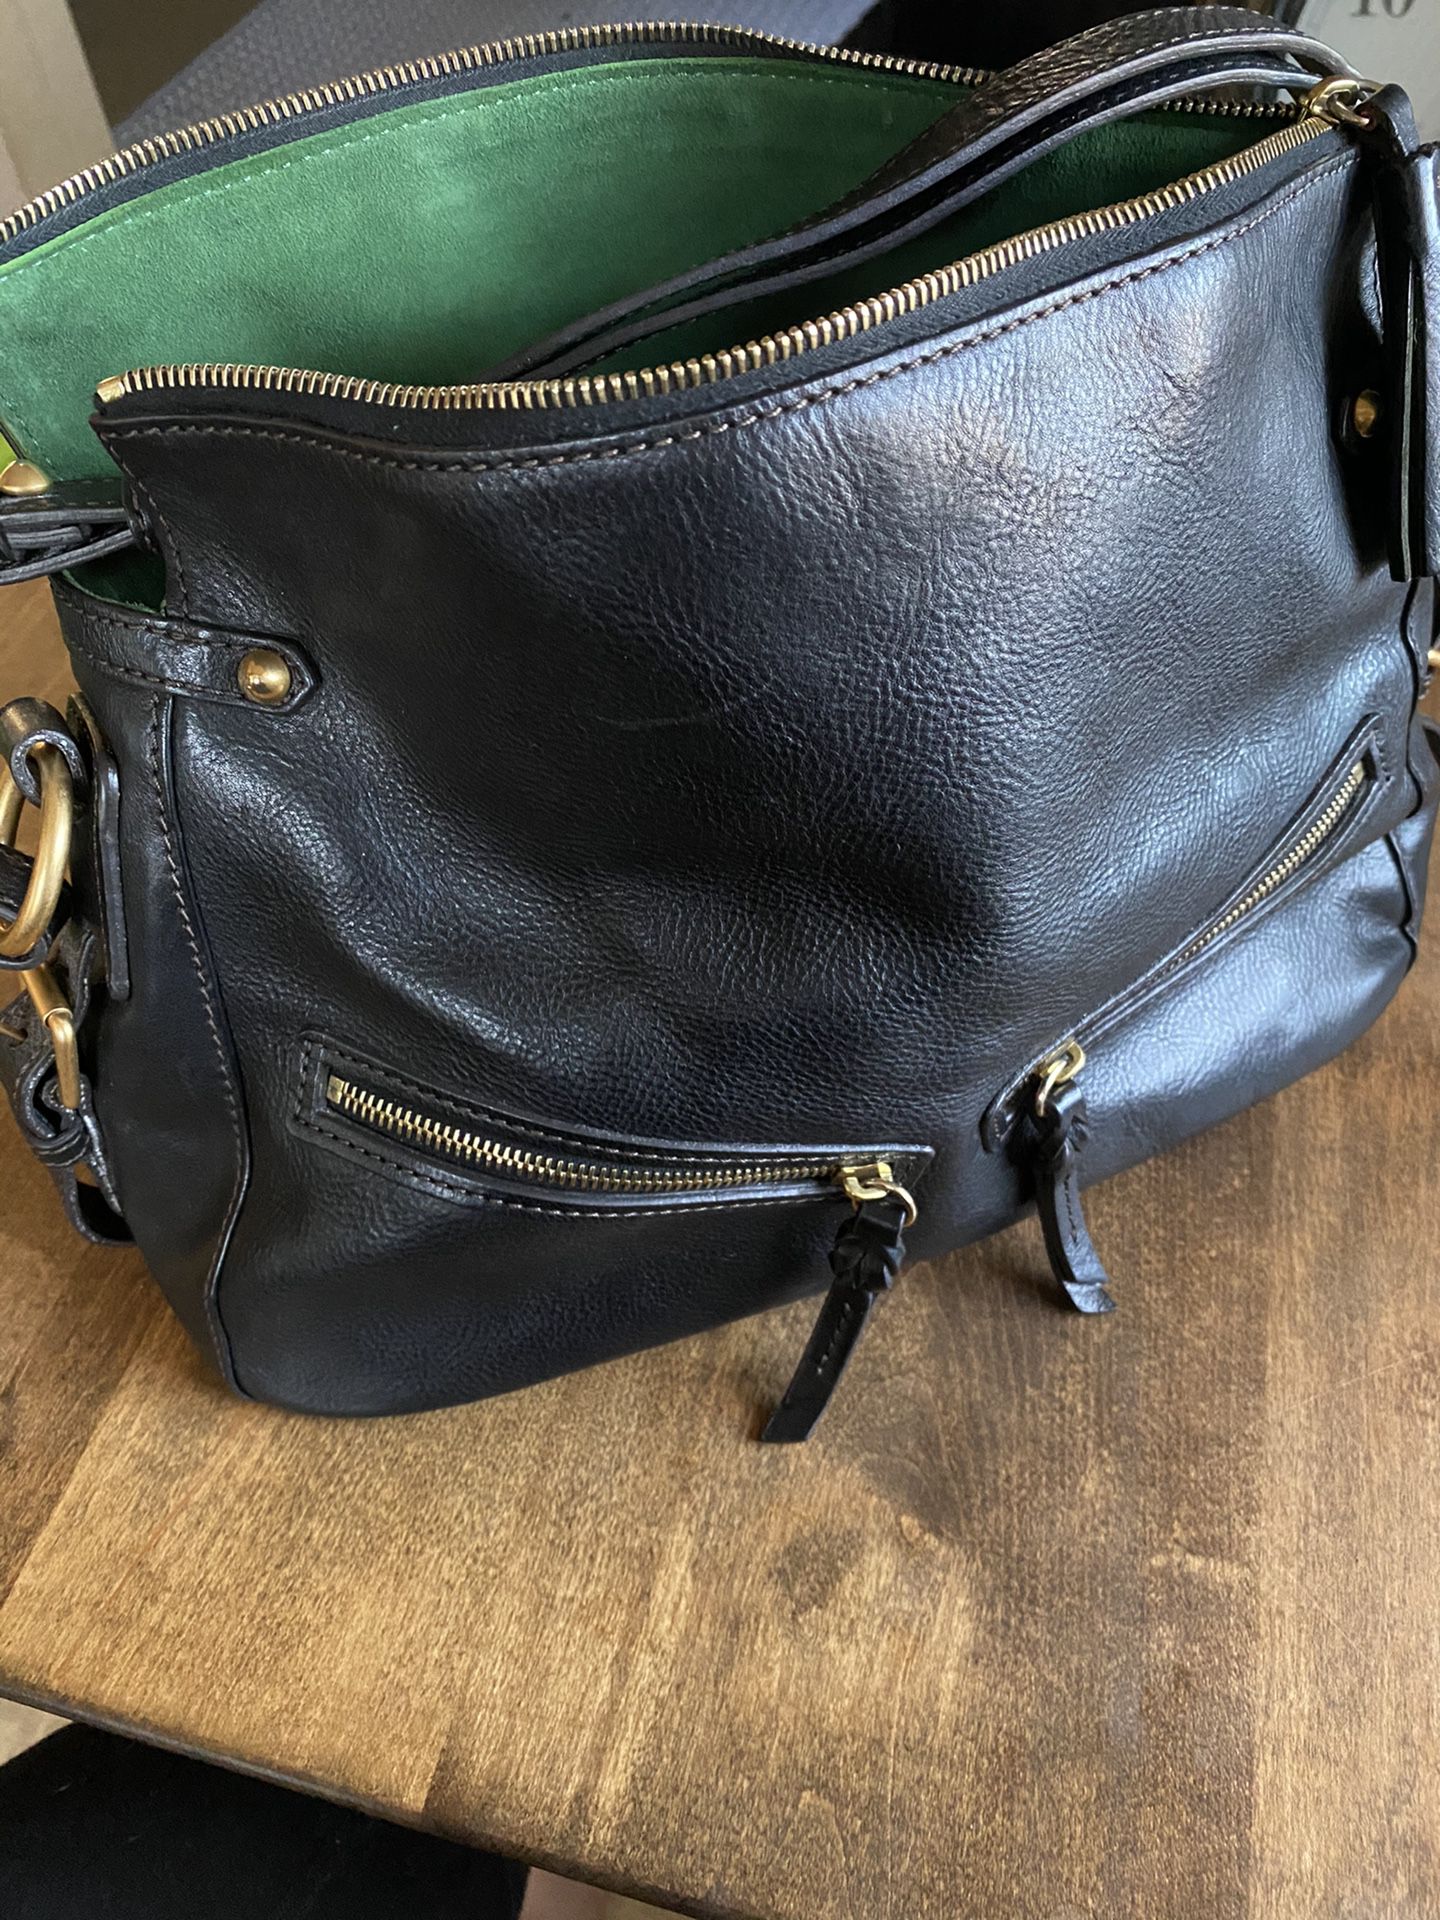 Dooney Bourke Purse Bag, Black, Used